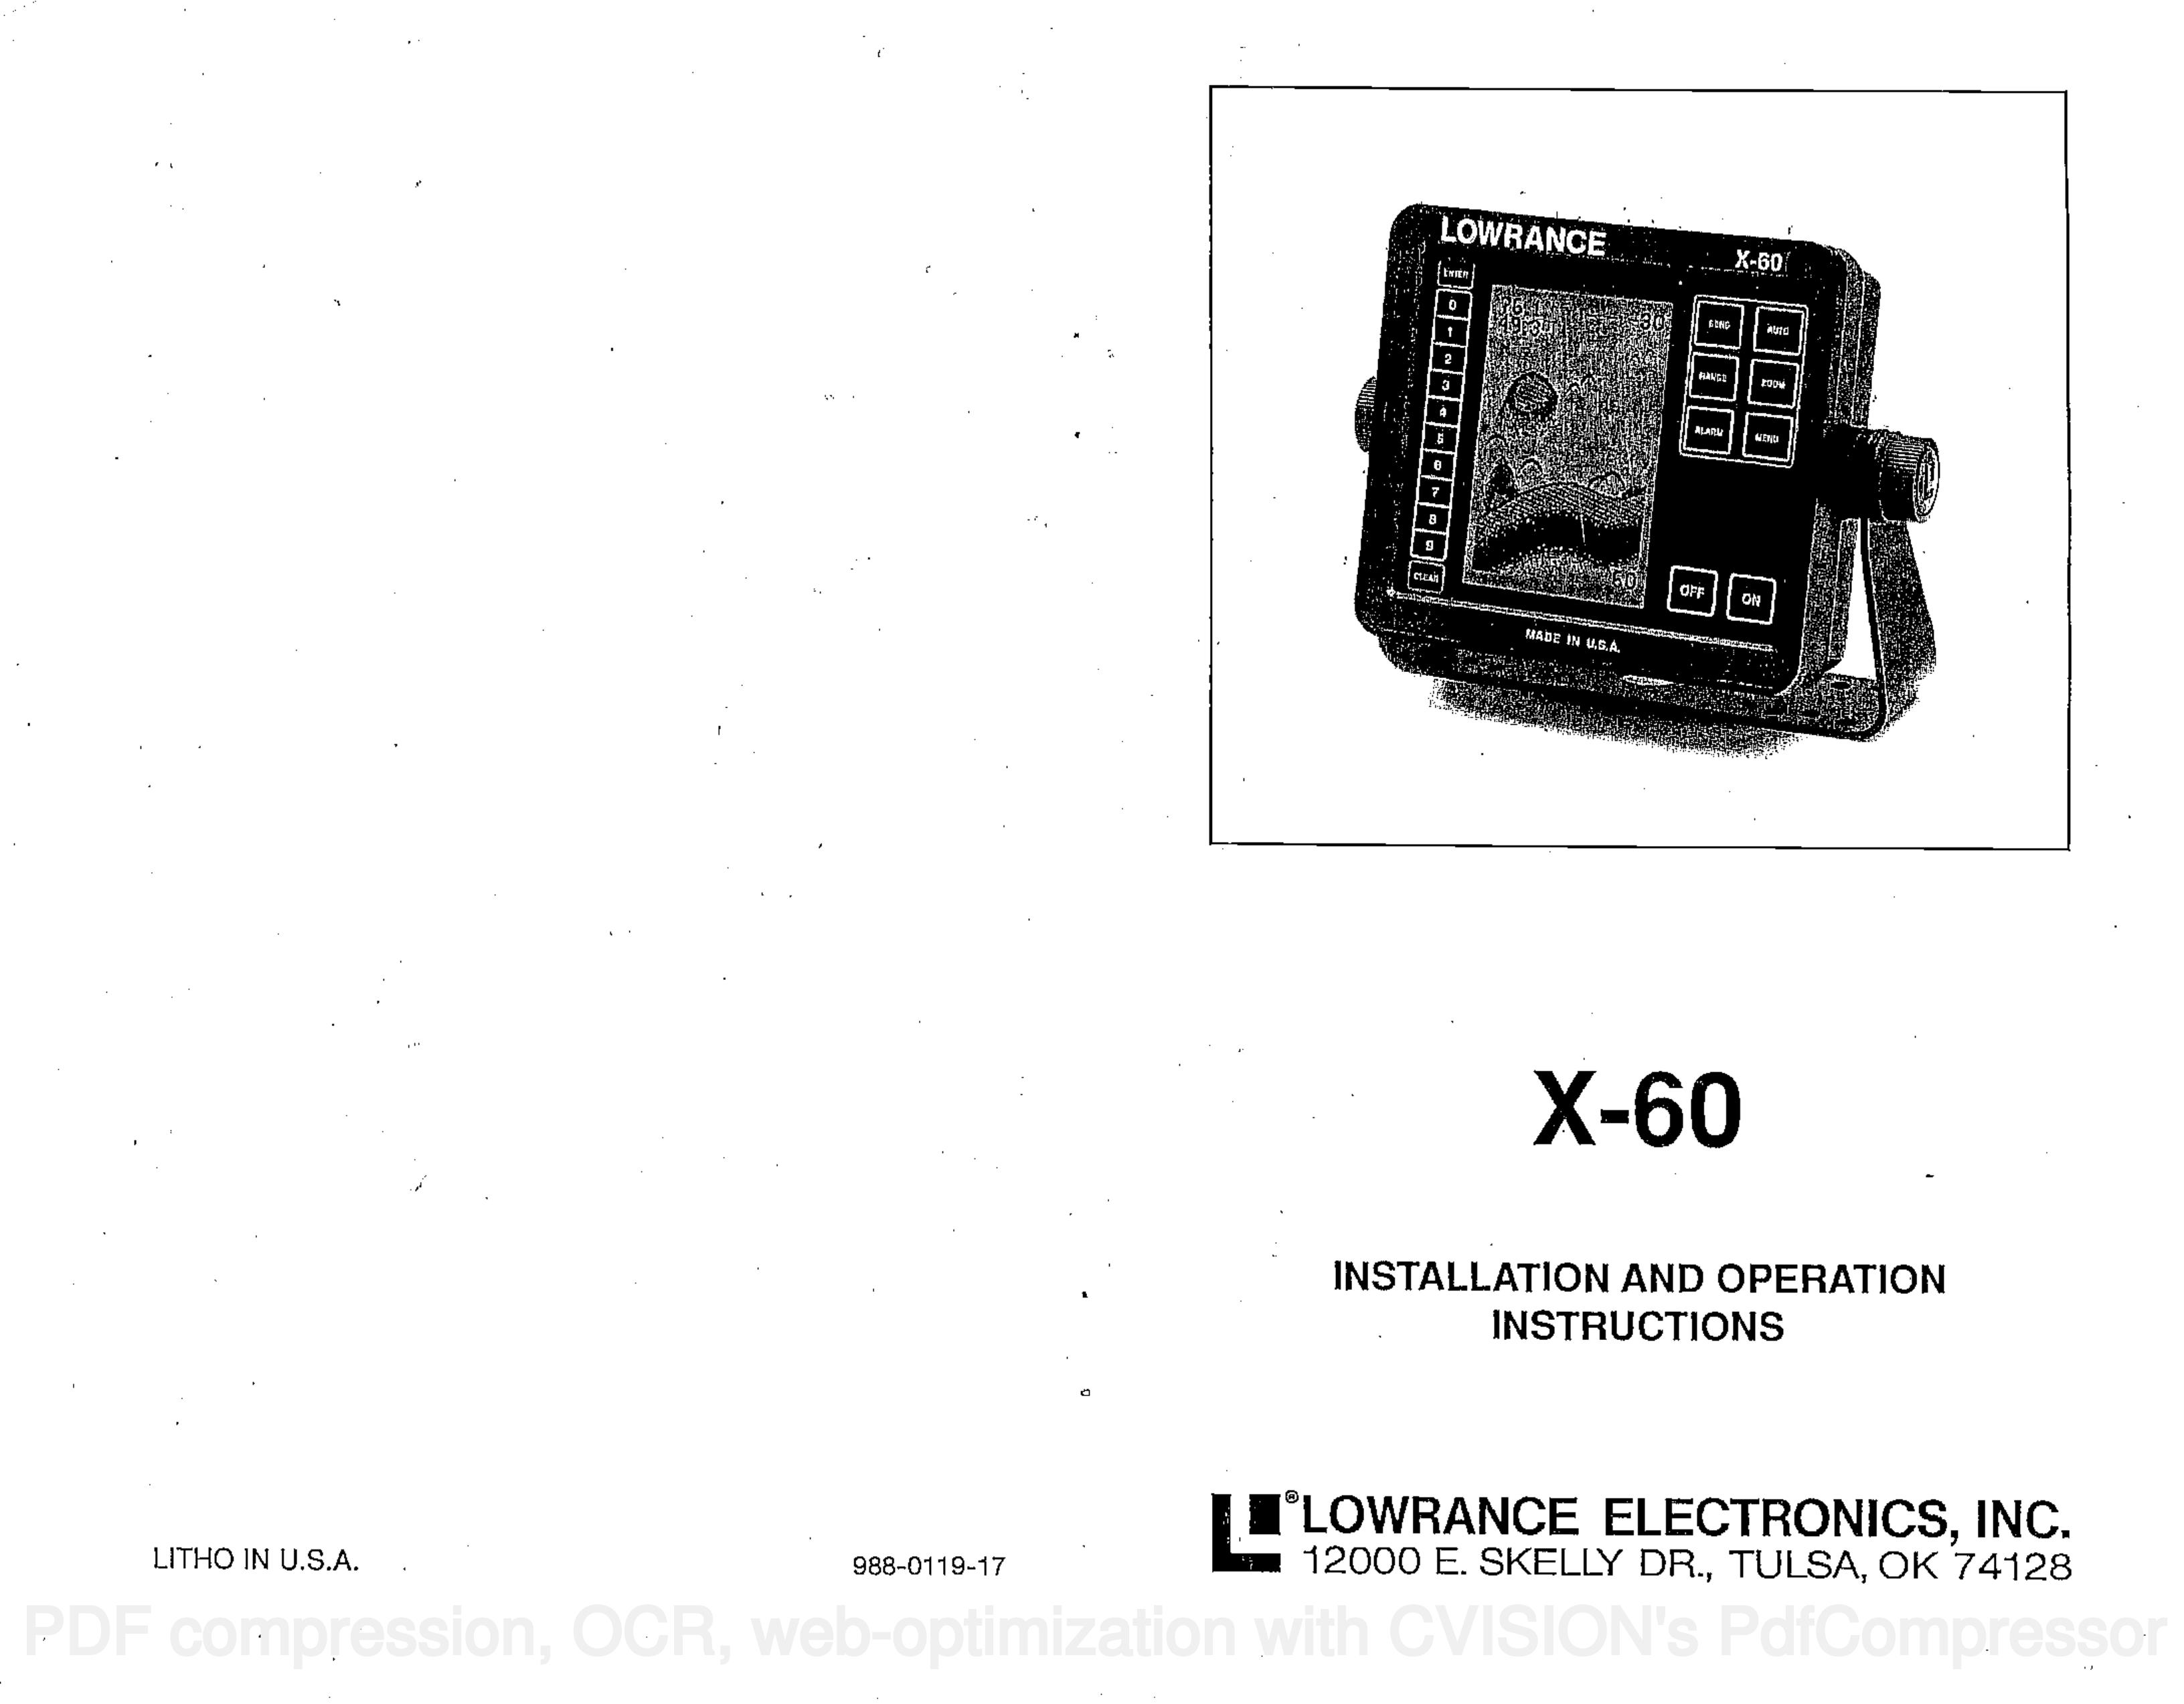 Lowrance electronic X-60 SONAR User Manual